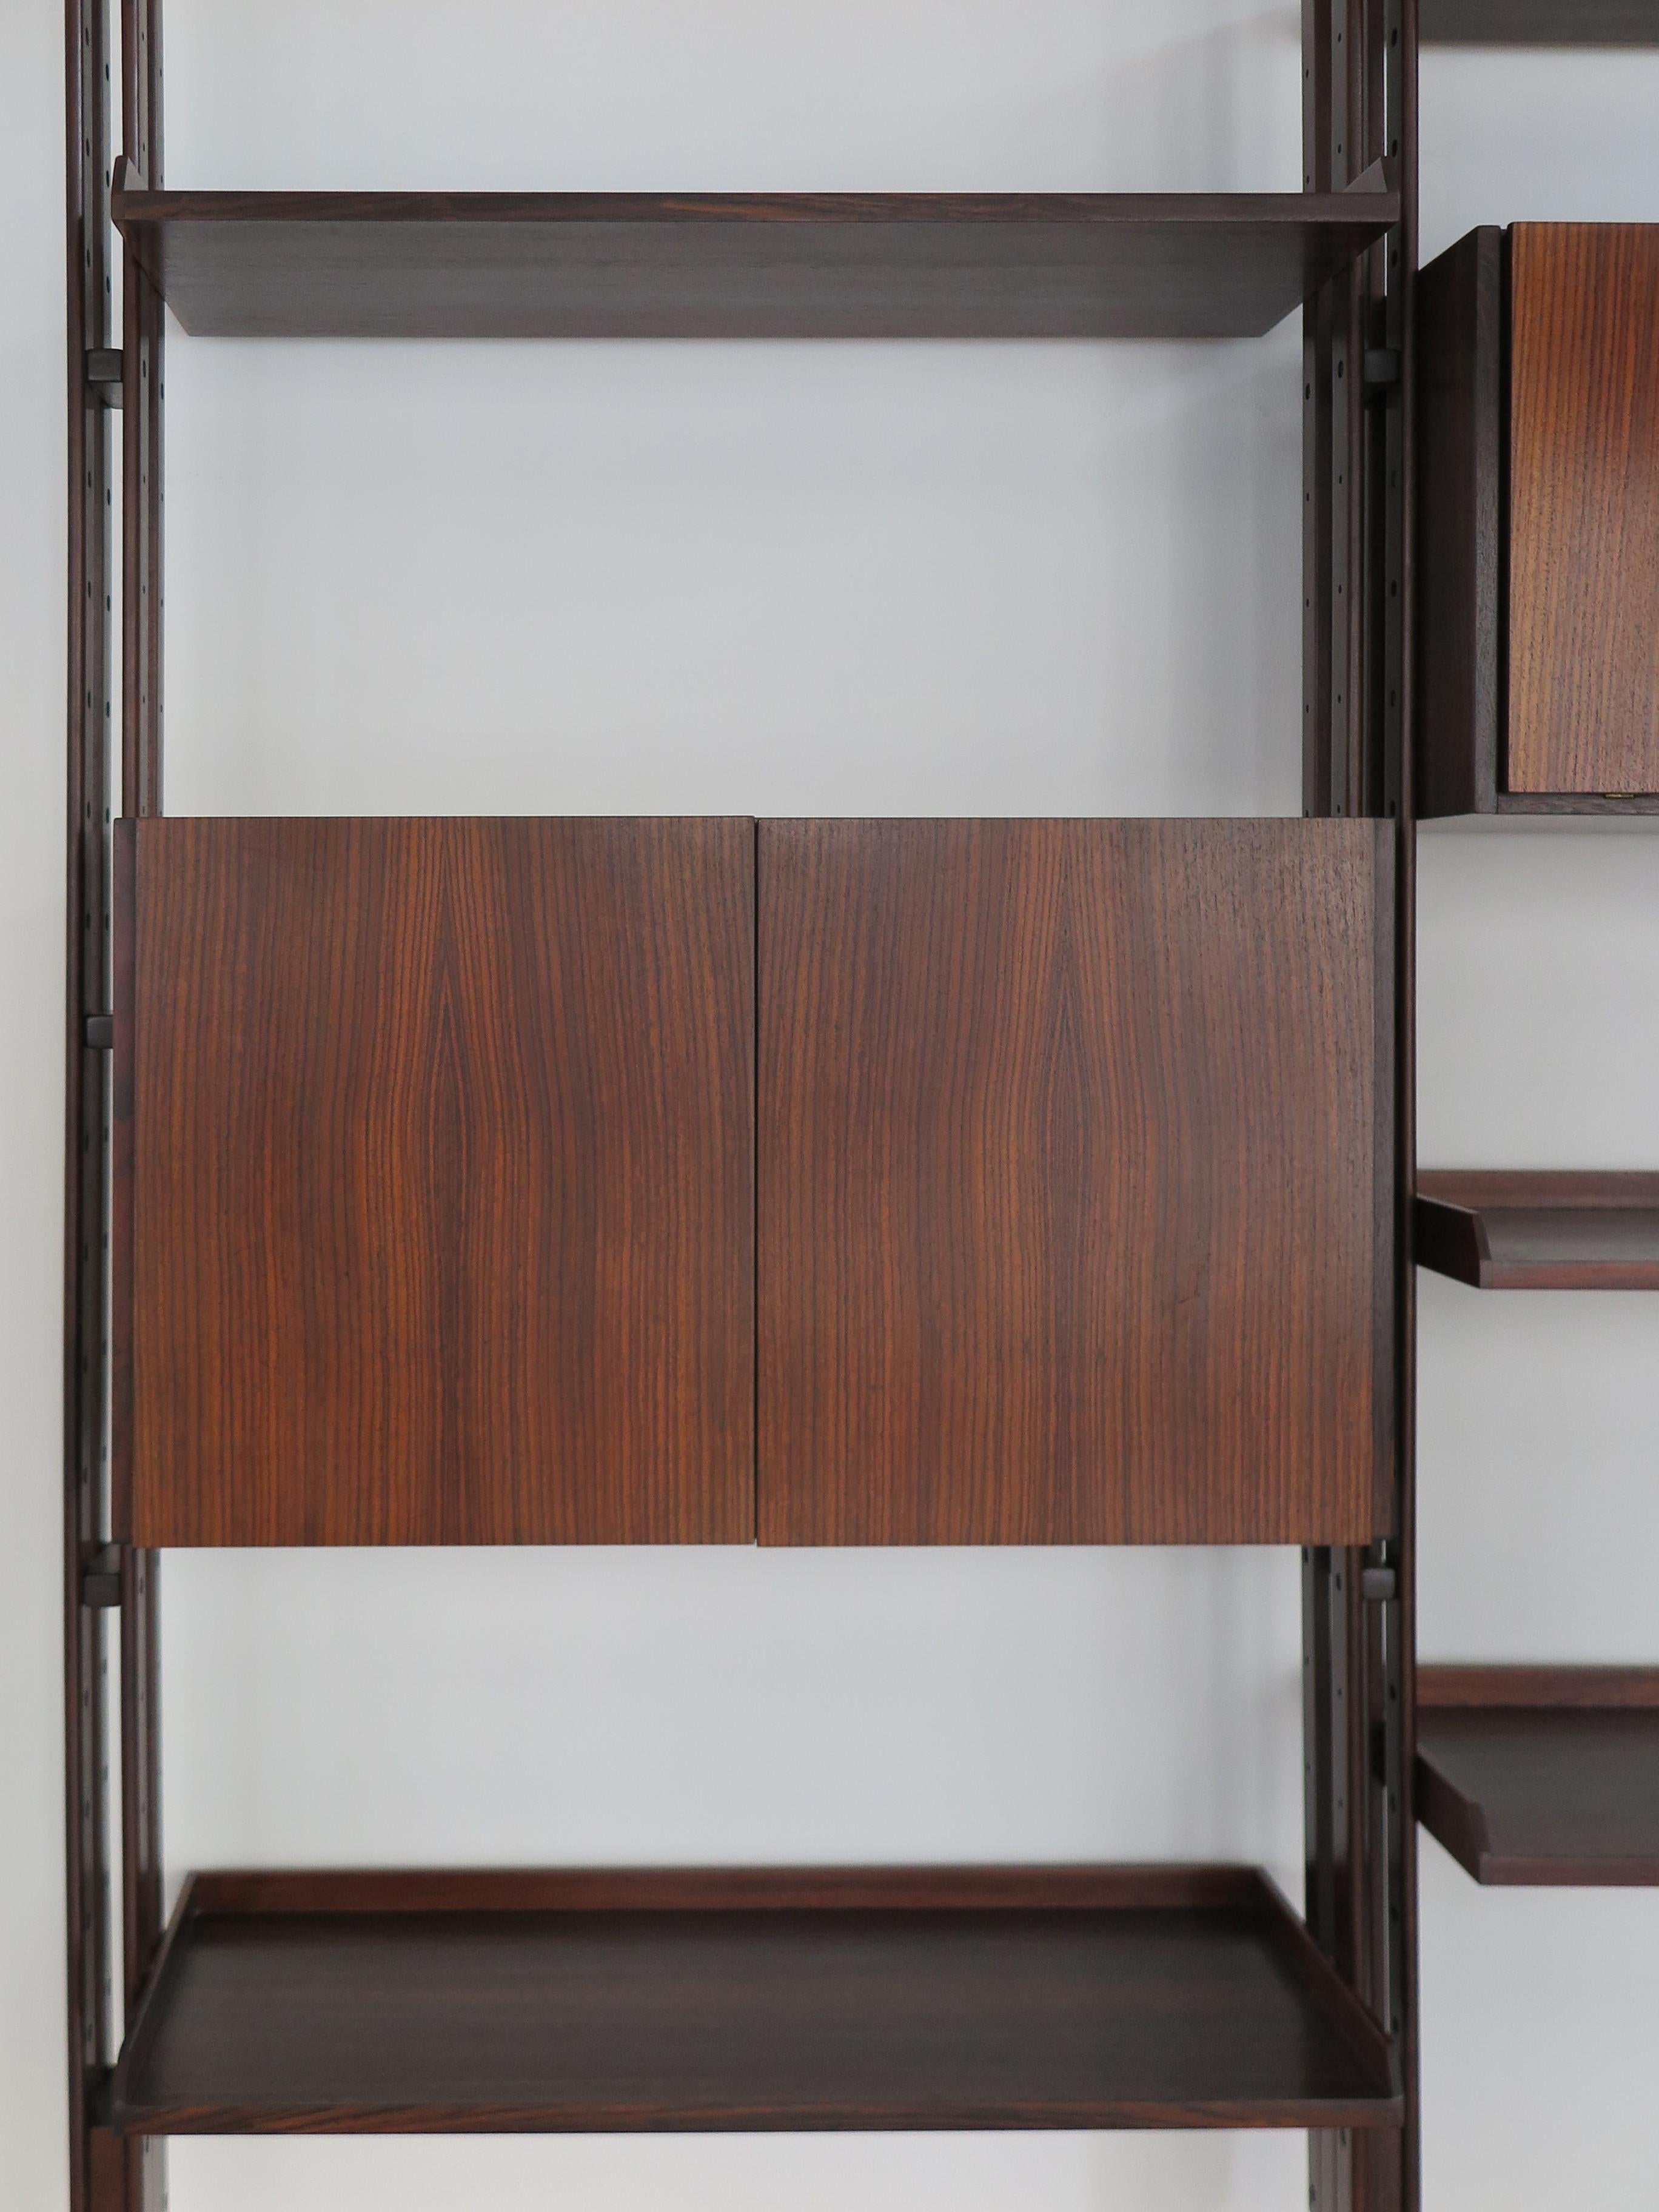 Mid-20th Century Franco Albini Italian Midcentury Dark Wood Bookcase Lb7 for Poggi, 1950s For Sale